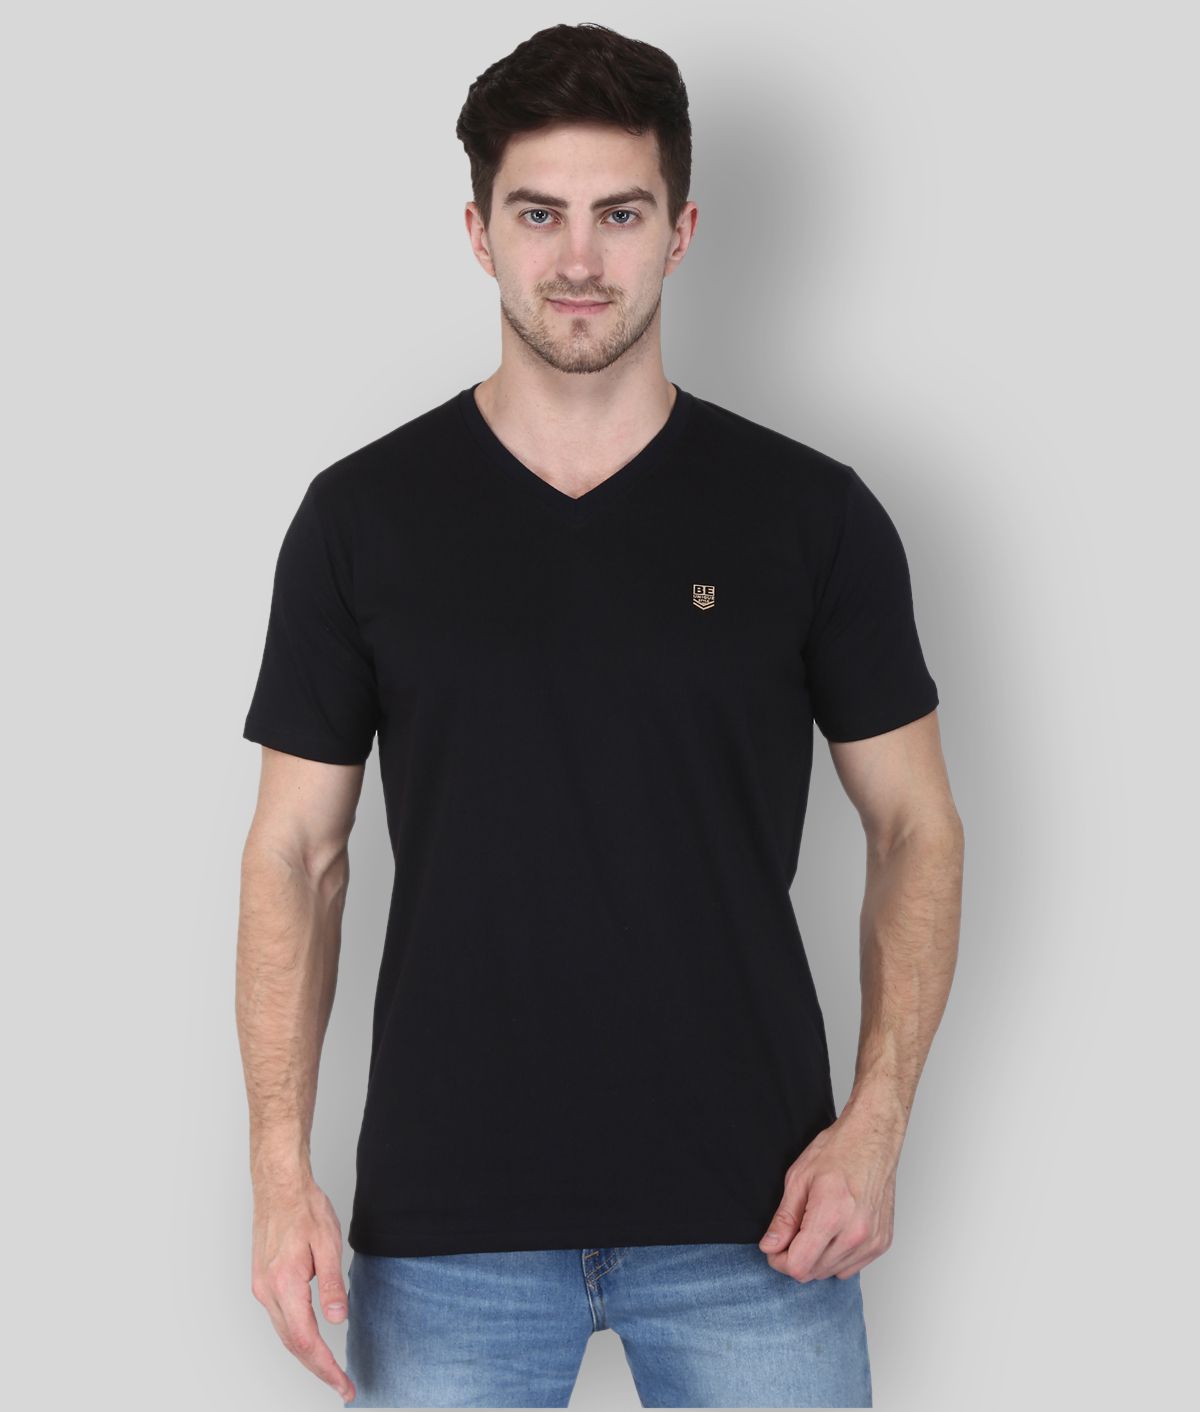 MADTEE - Black Cotton Regular Fit Men's T-Shirt ( Pack of 1 )